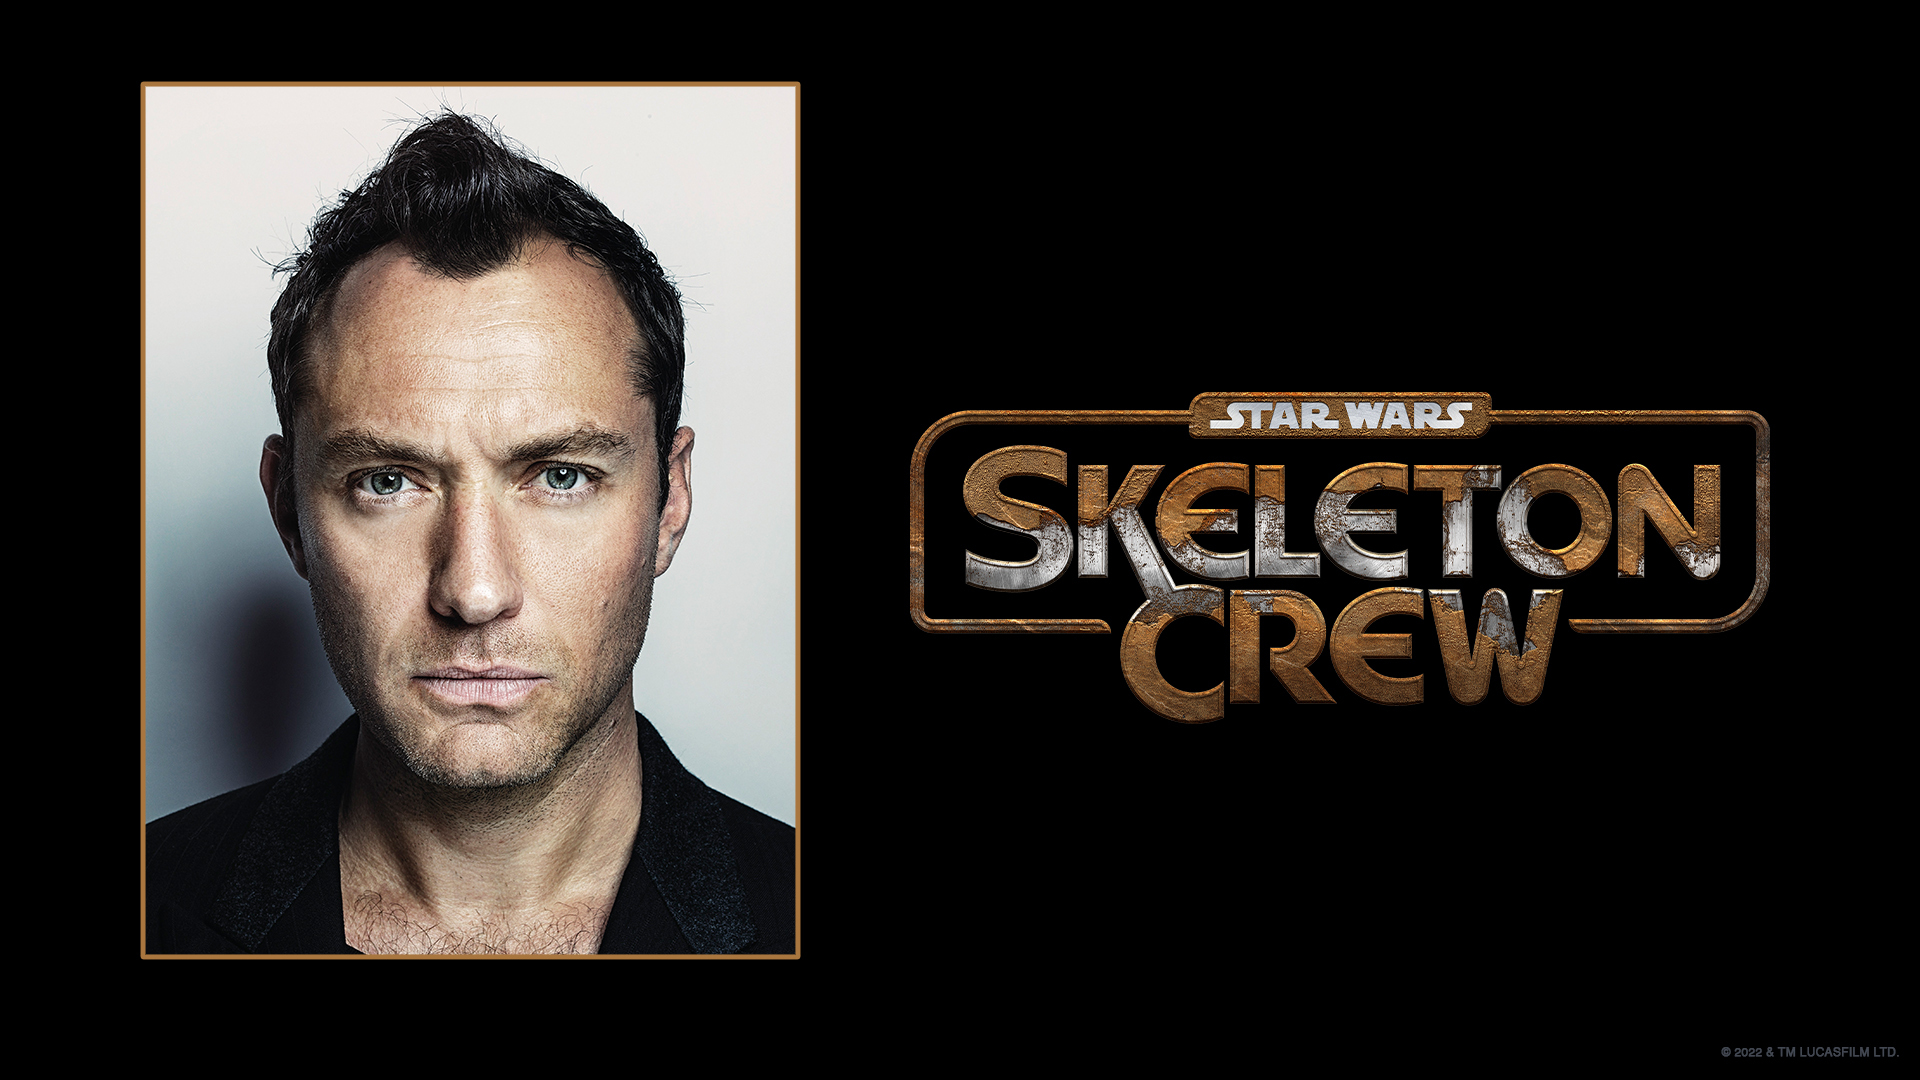 Jude Law to Star in ‘Star Wars: Skeleton Crew’ Director Jon Watts Confirmed